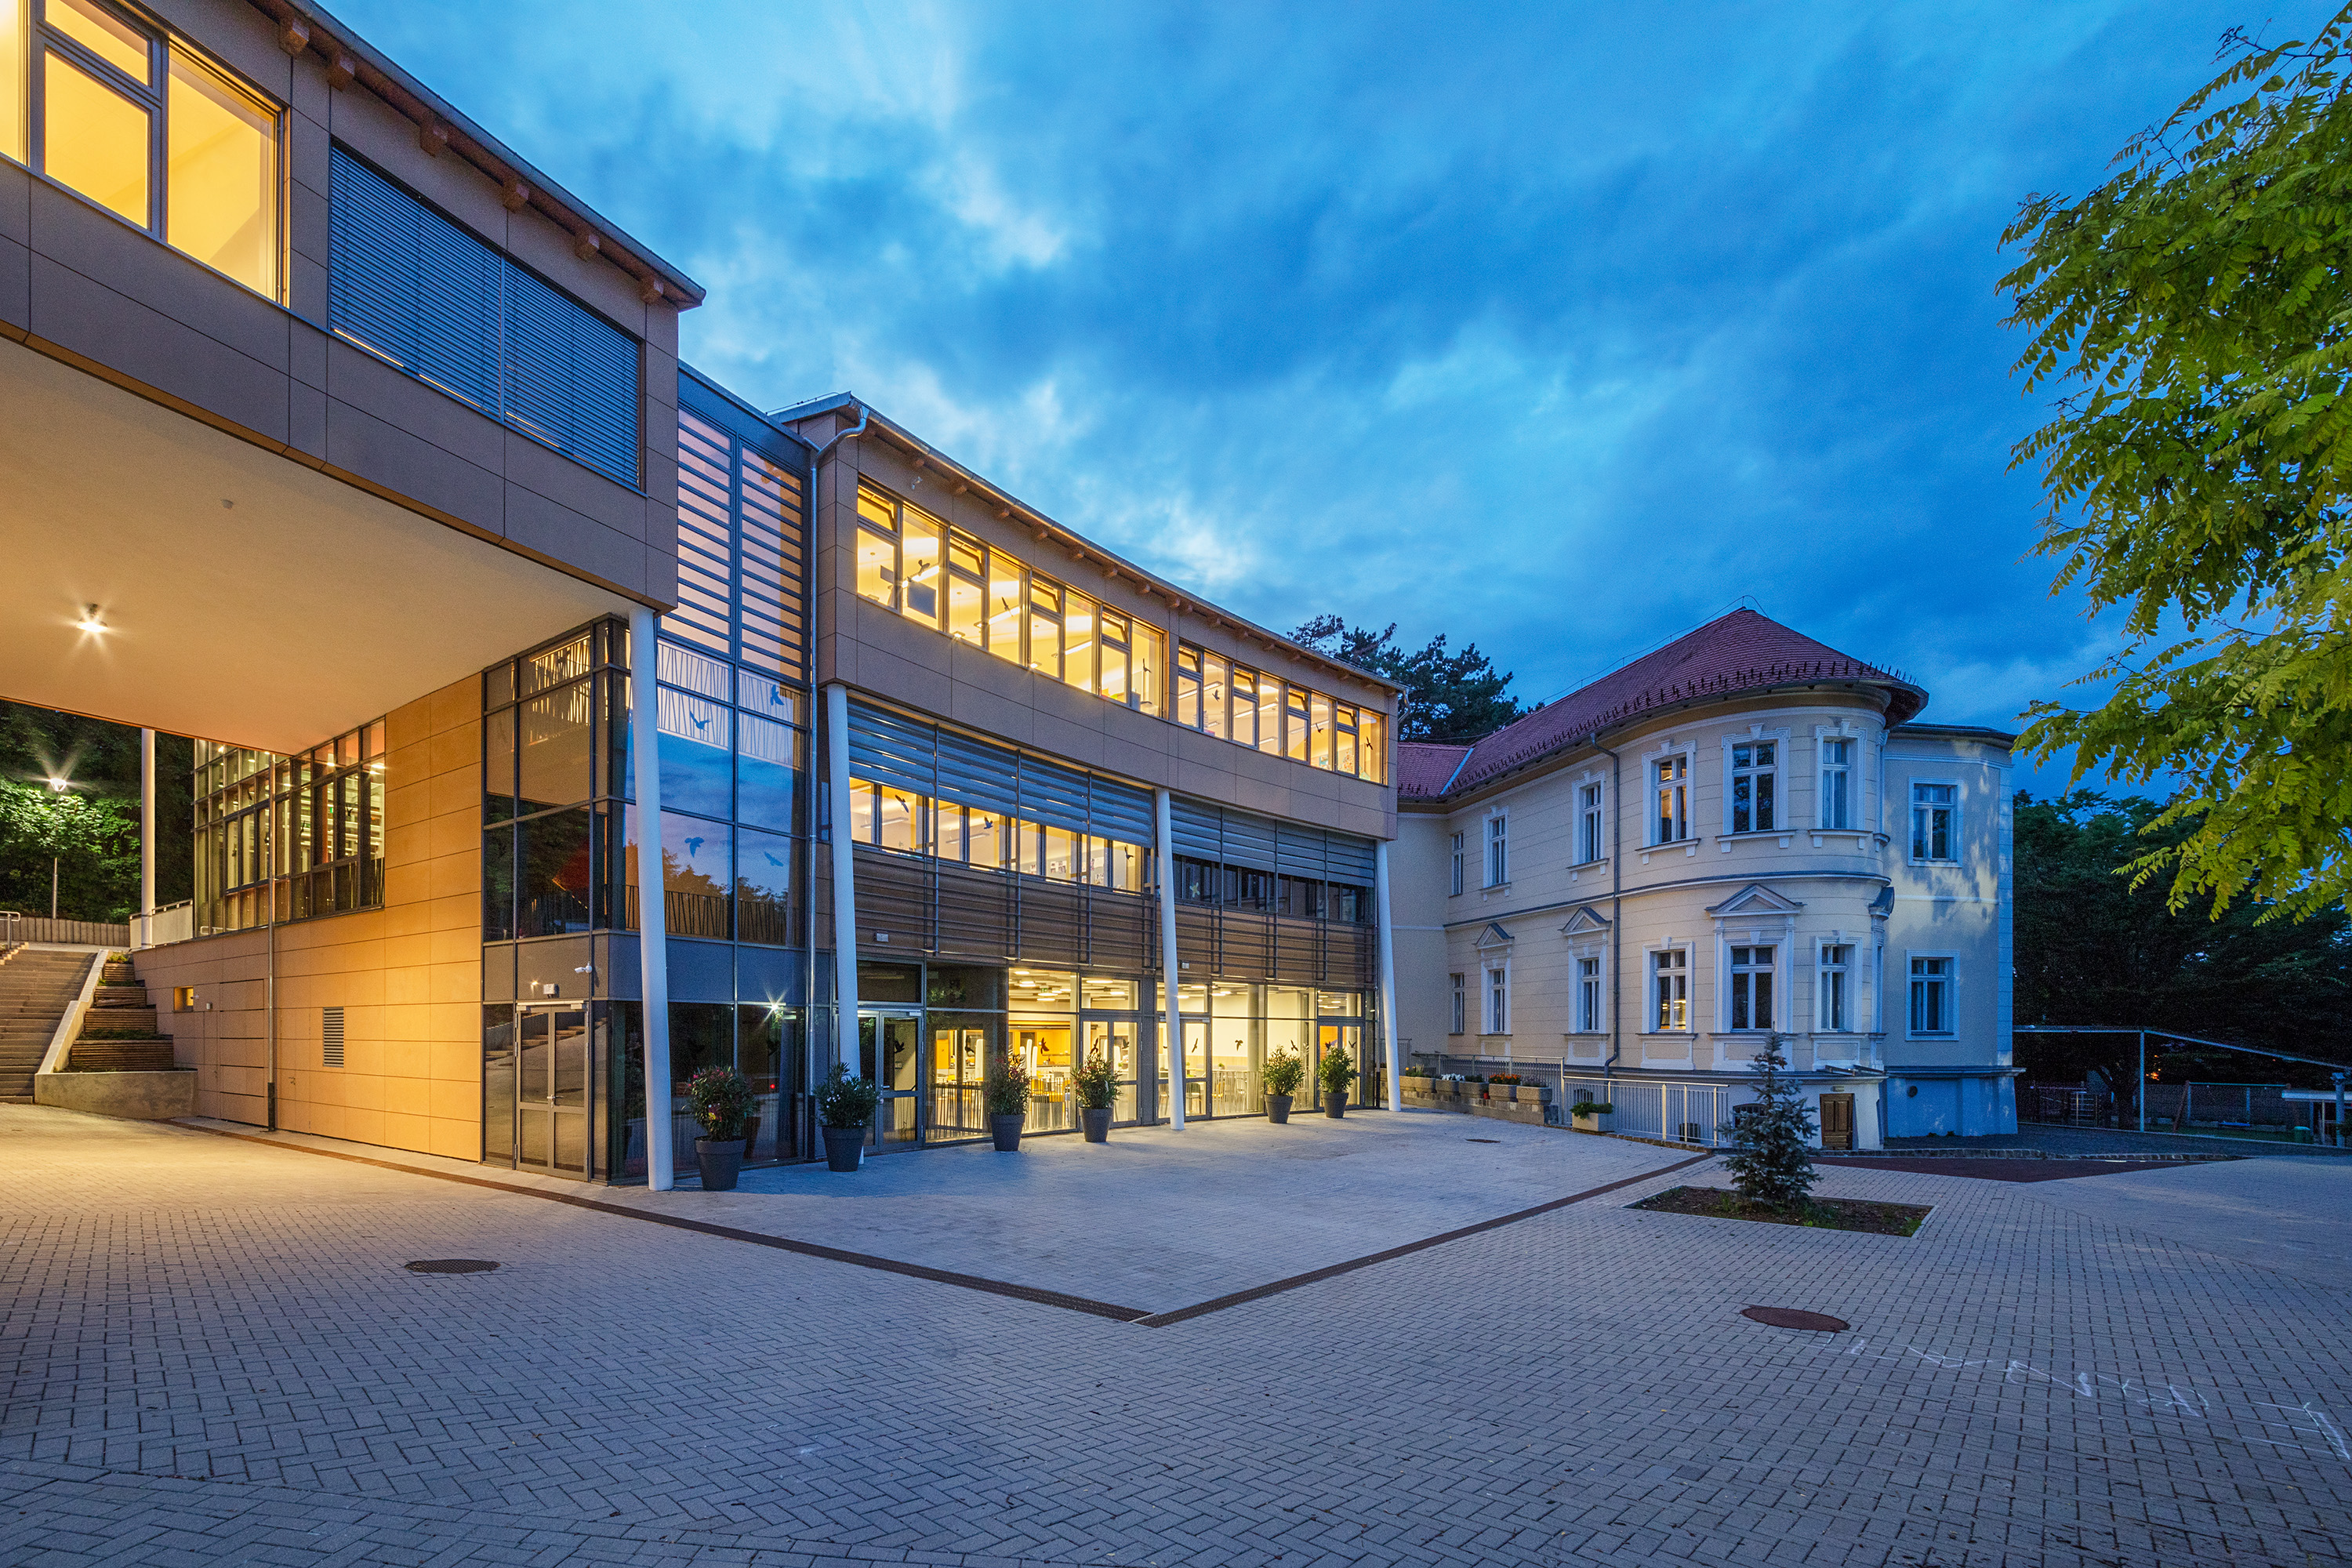 Német Iskola bővítése  - Bygningskonstruksjon